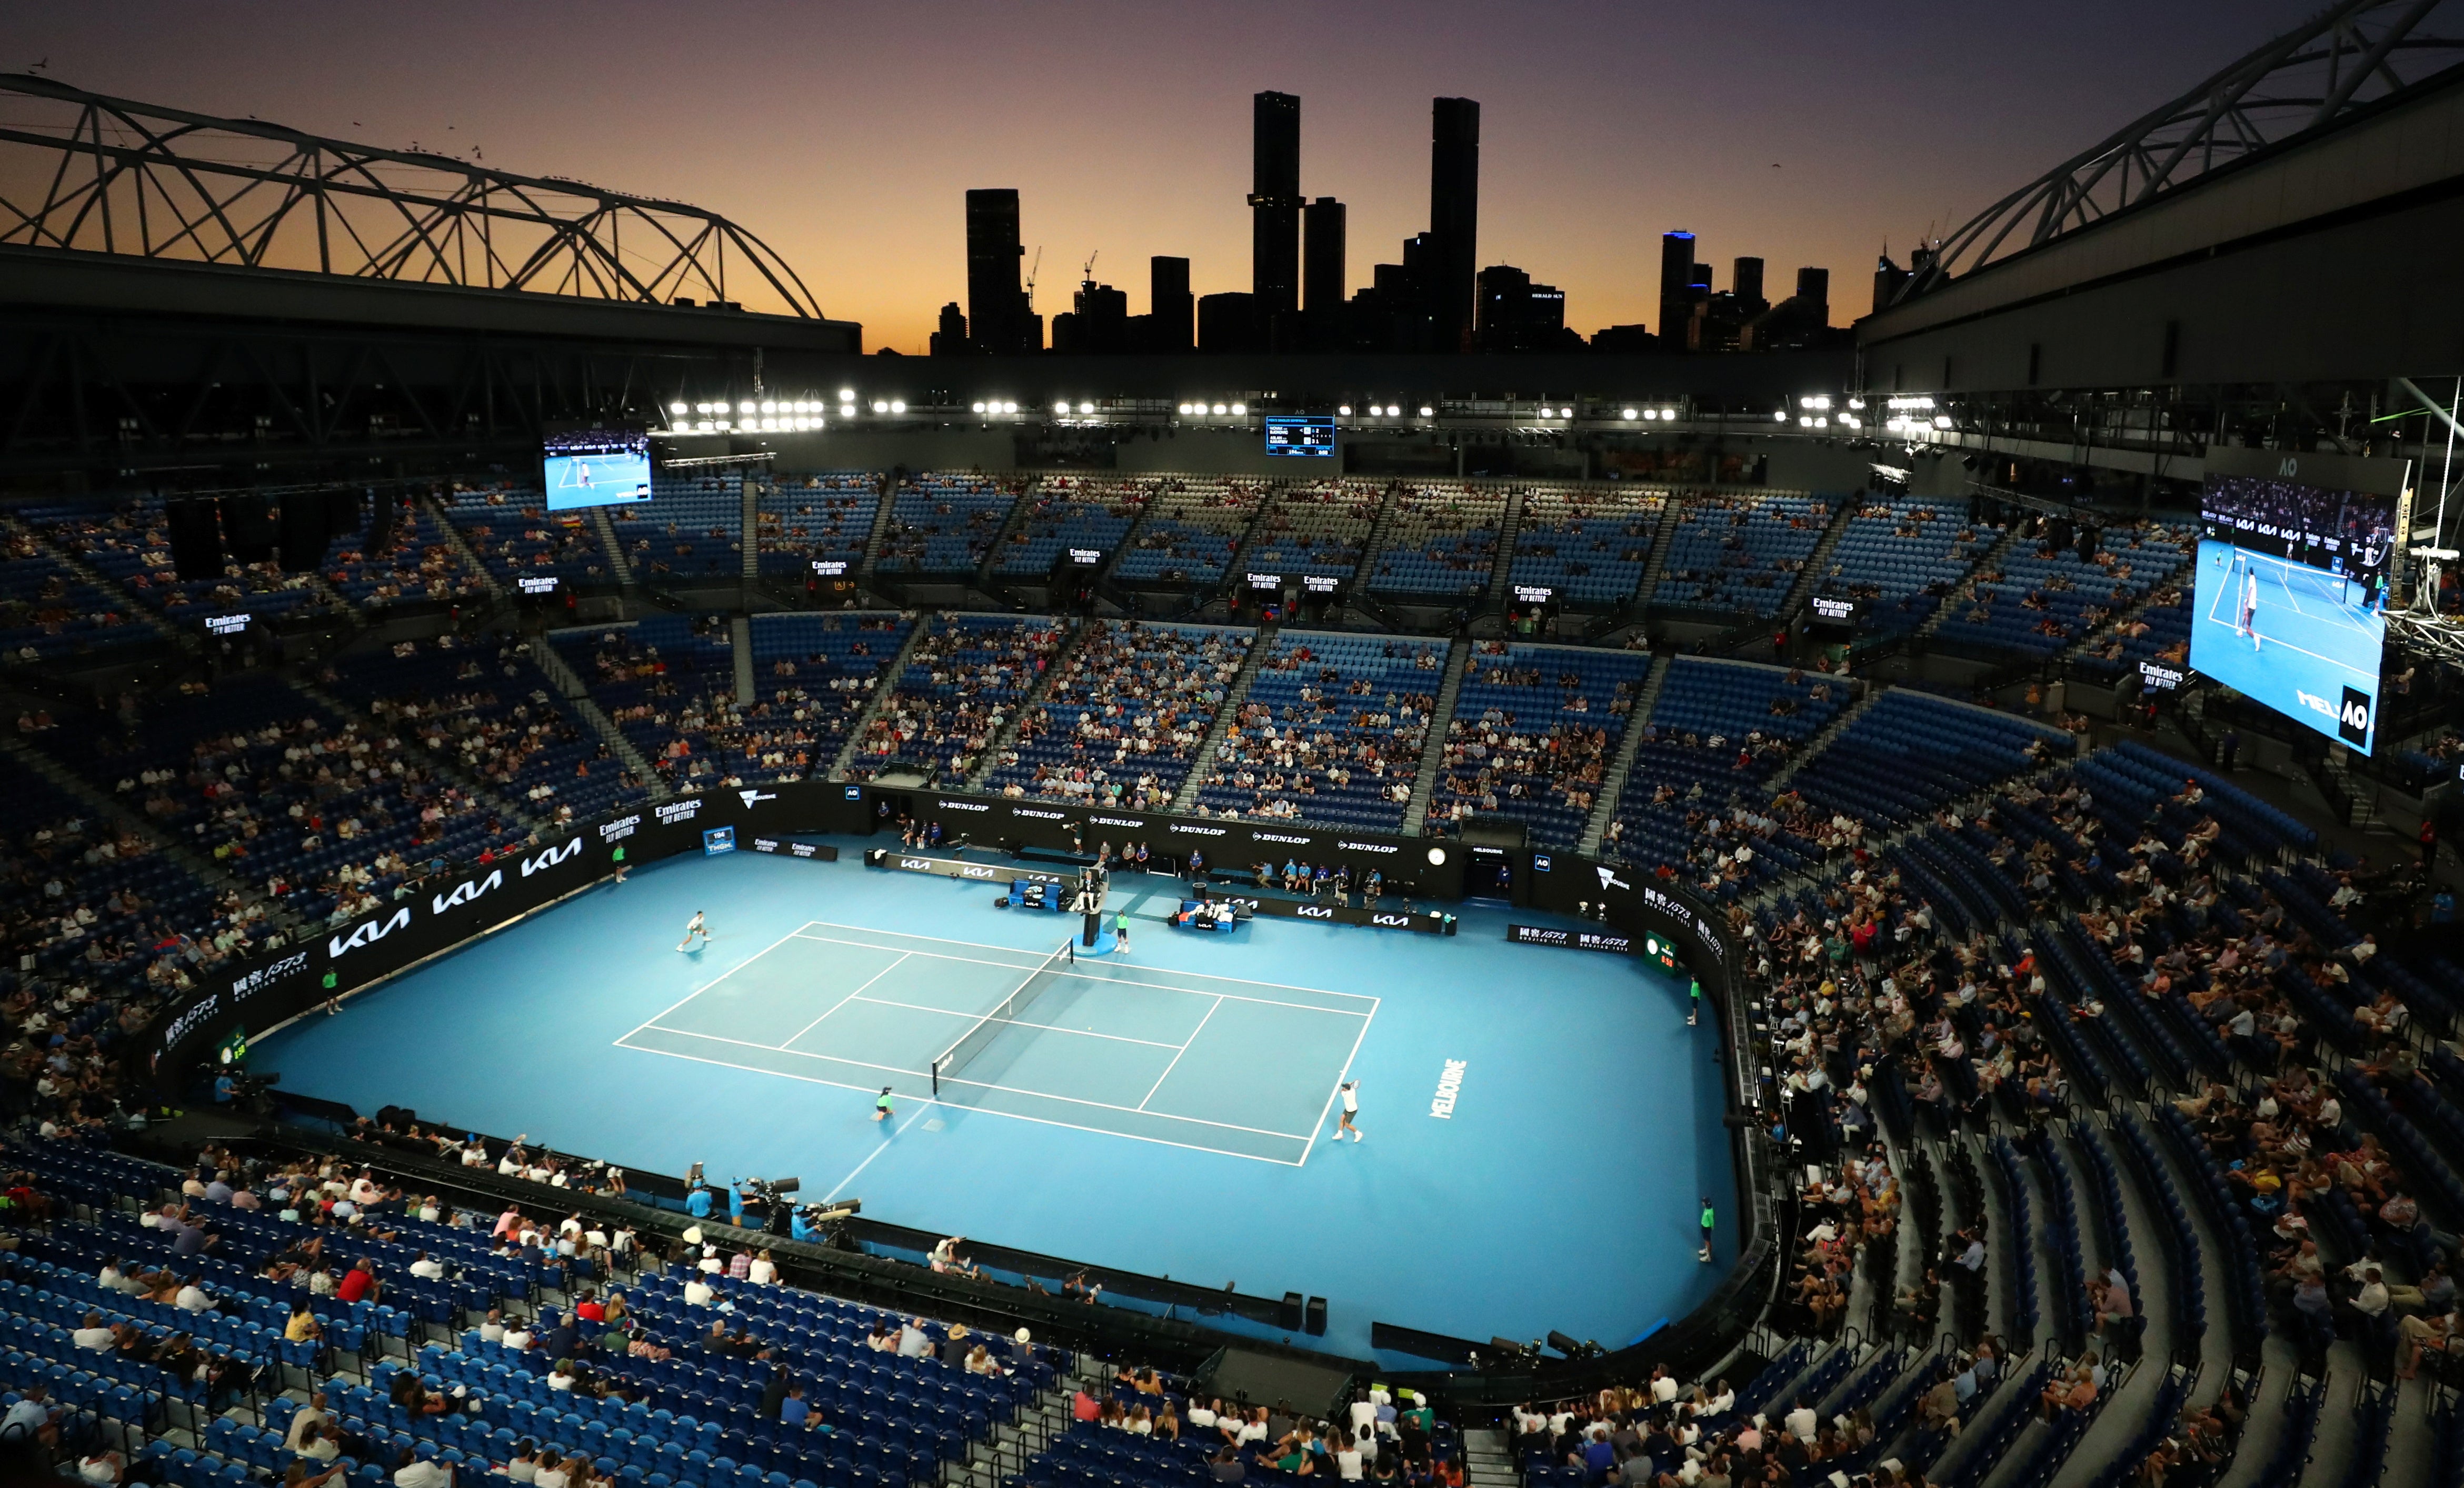 A vewi of Rod Laver Arena at Melbourne Park